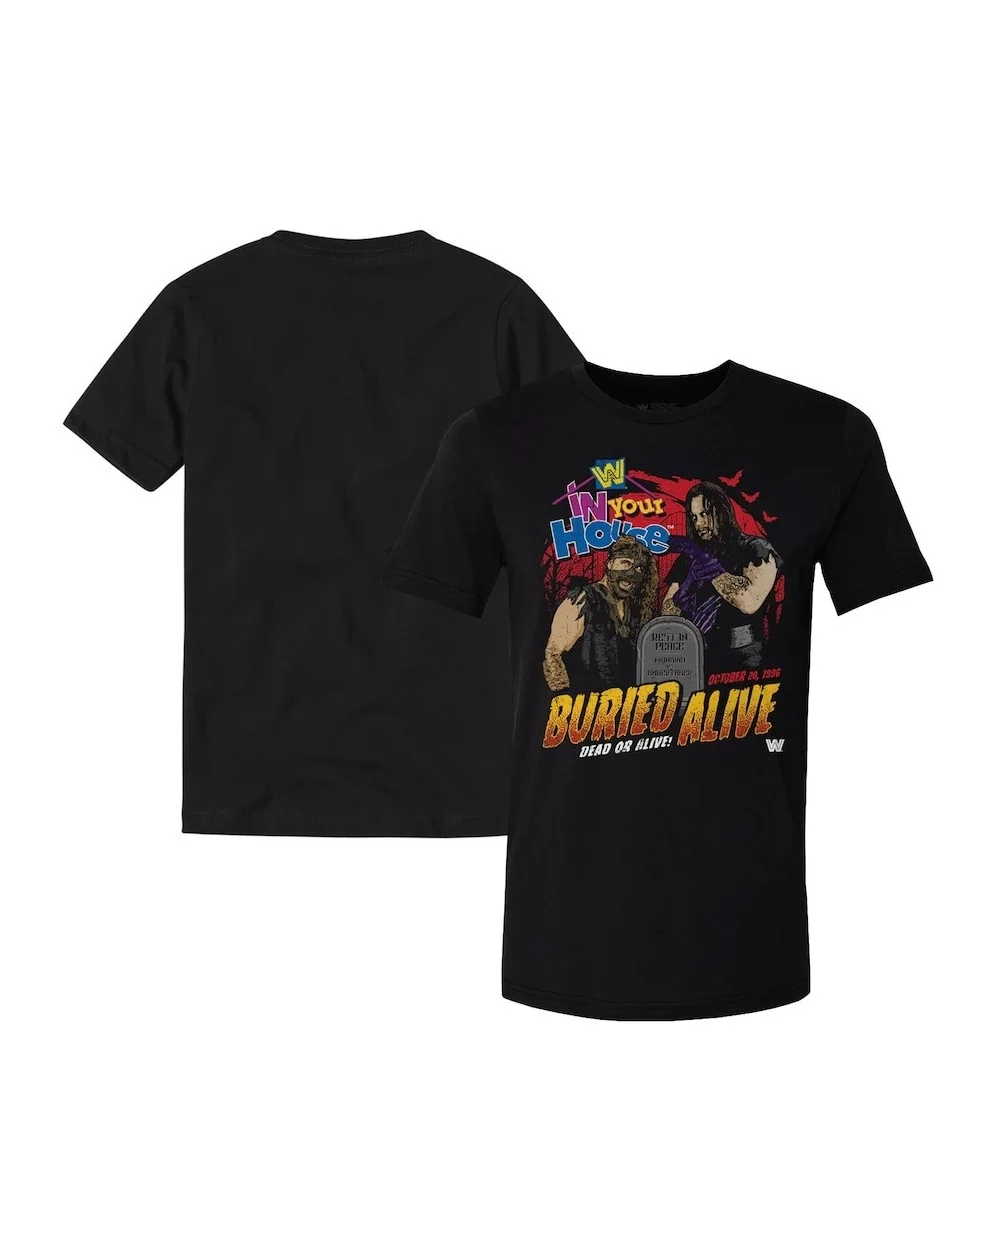 Men's Black The Undertaker vs. Mankind Buried Alive Match T-Shirt $8.64 T-Shirts